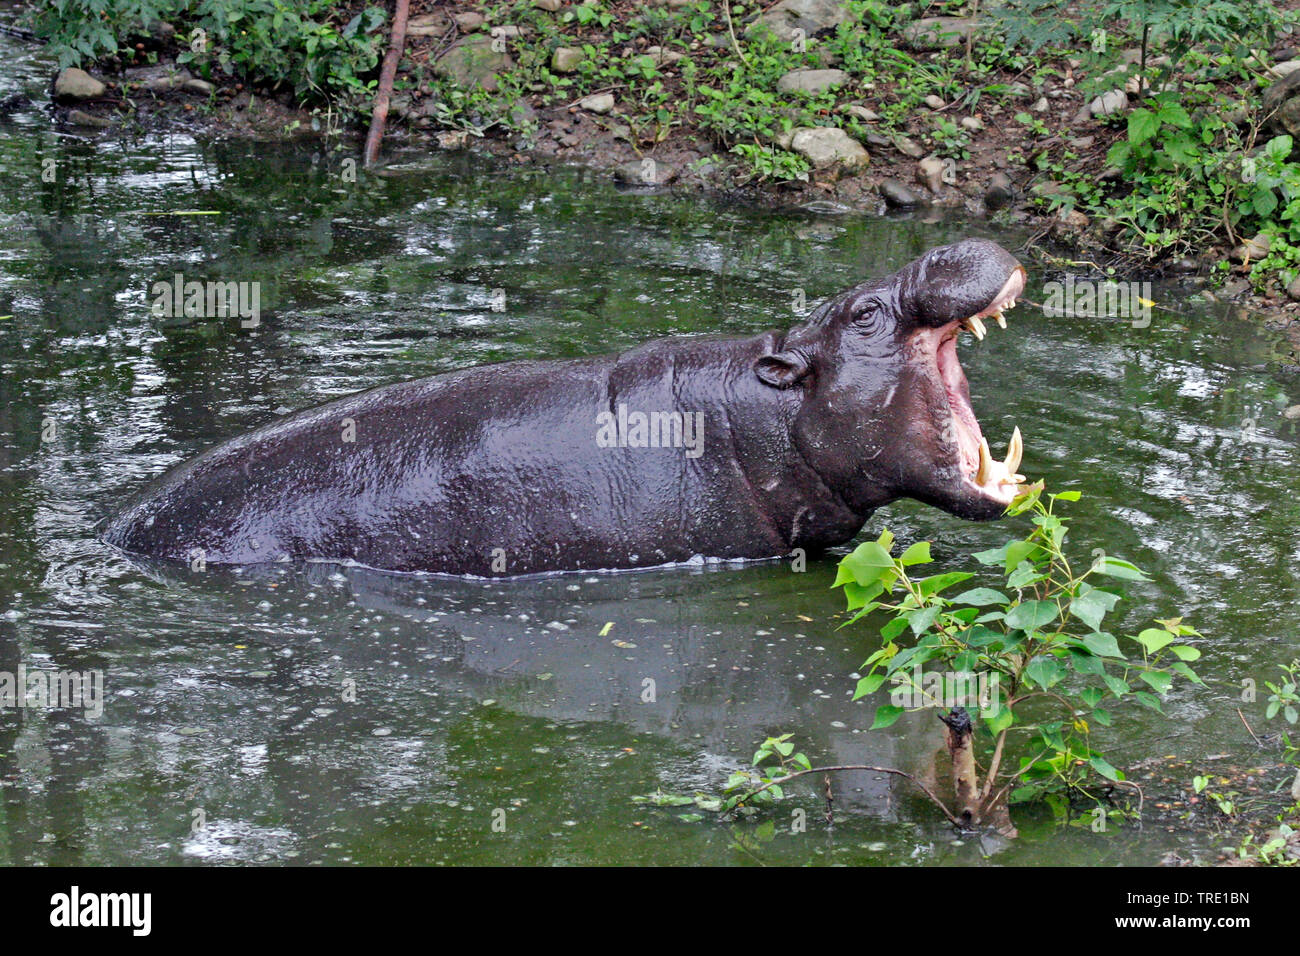 pygmy hippopotamus (Hexaprotodon liberiensis, Choeropsis liberiensis), sitting on water, Taiwan Stock Photo